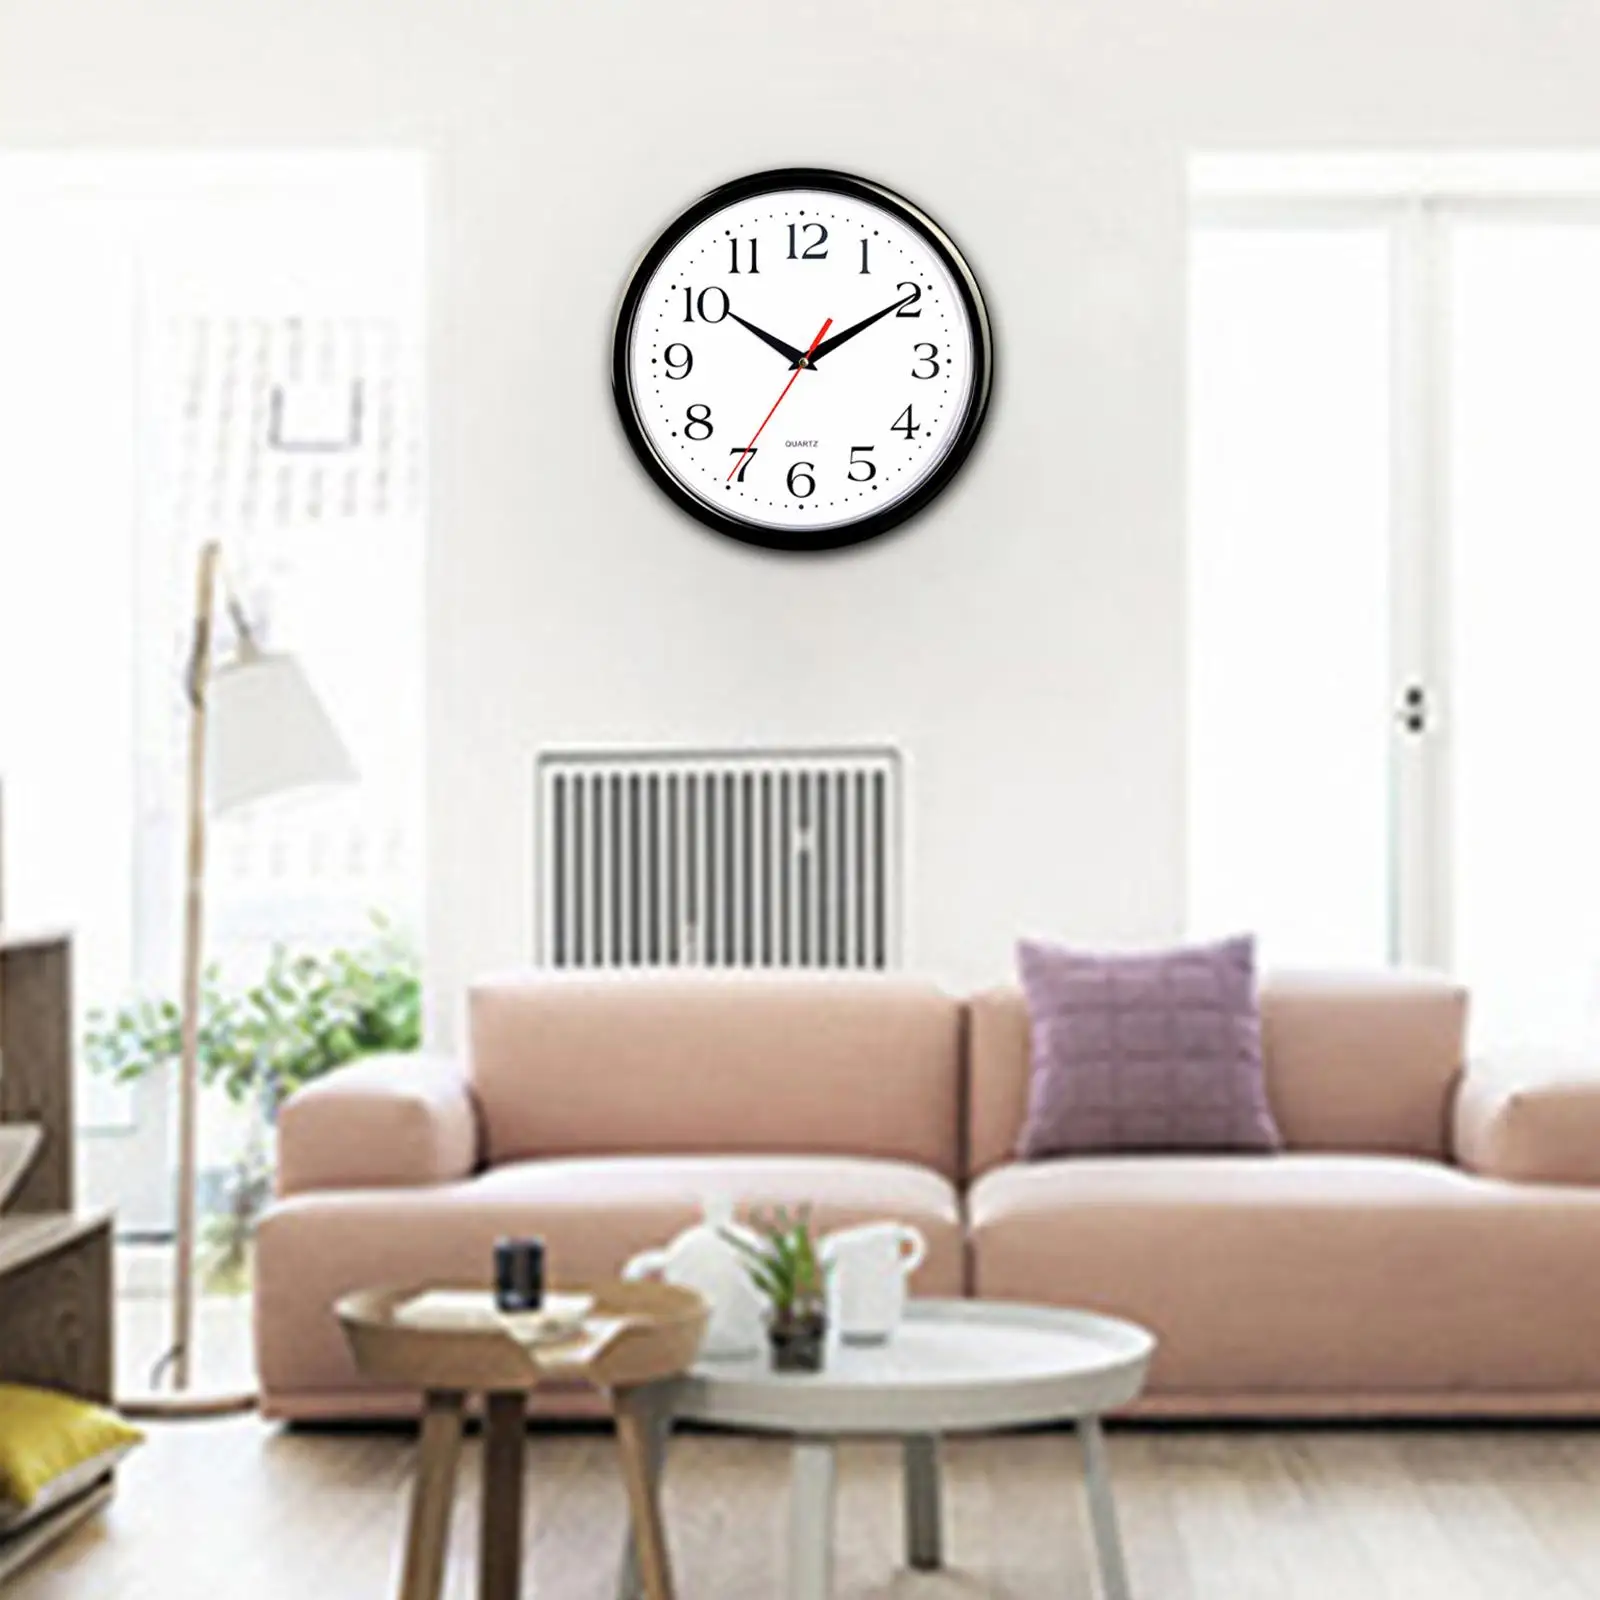 Wall Clock Decorative Digital Read for Bedroom Office Decor